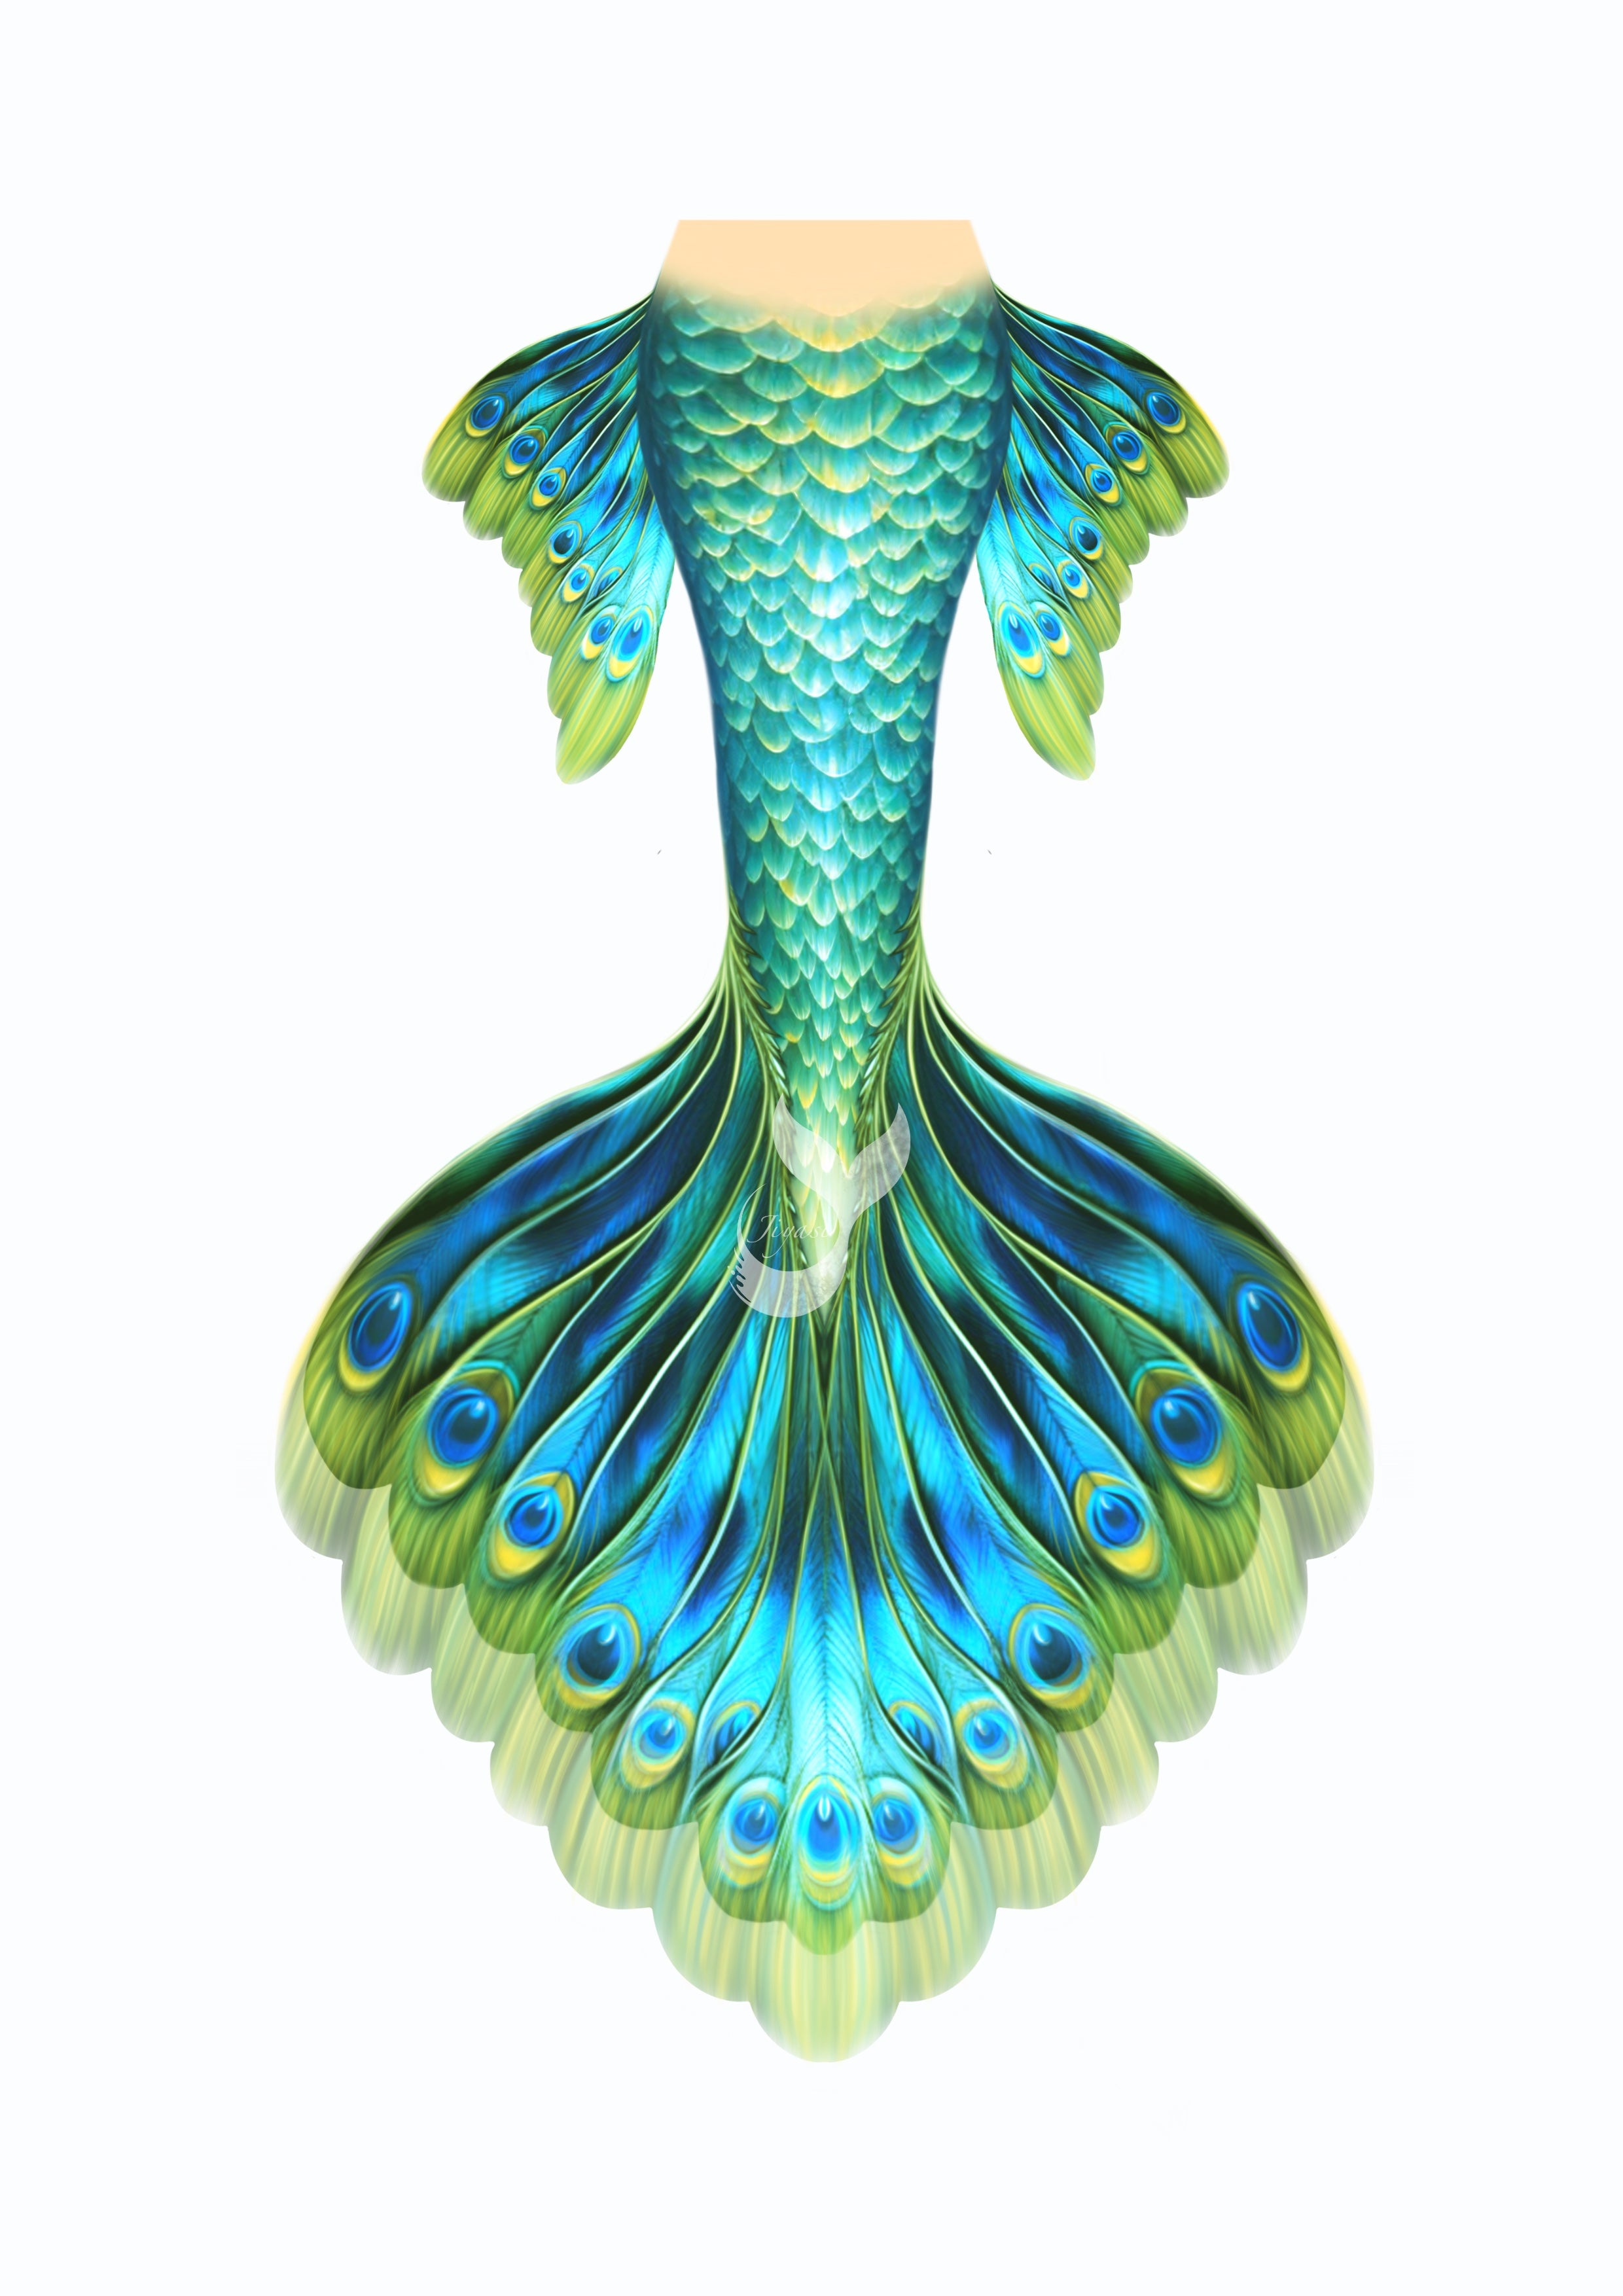 JIYASI Peacock Fairy Mermaid Tail